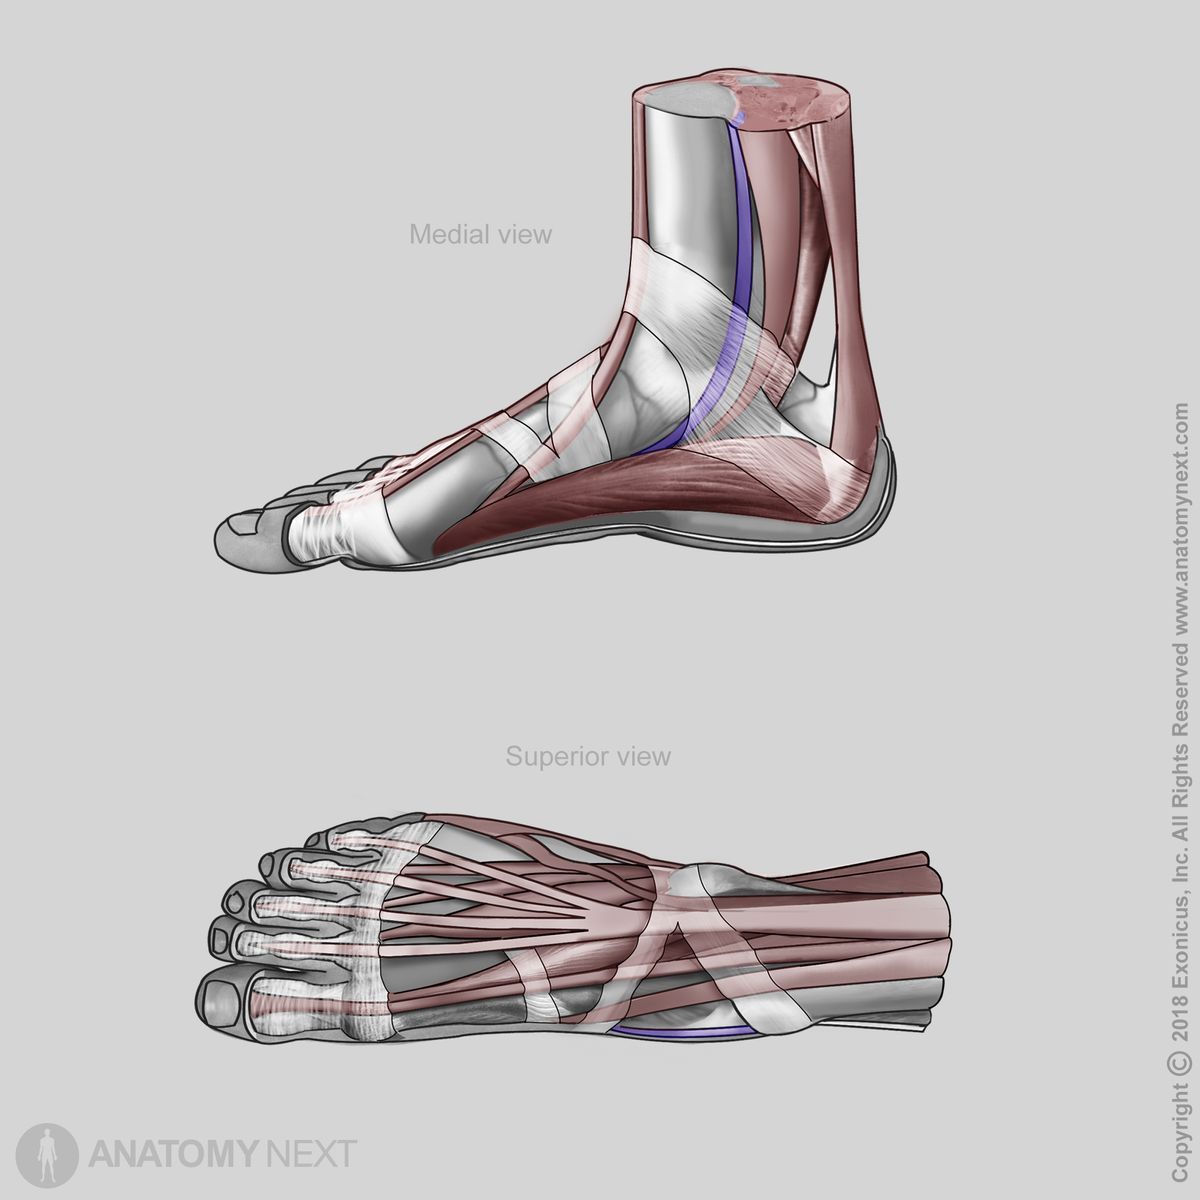 Tibialis posterior, Insertion of tibialis posterior, Tibialis posterior tendon, Posterior compartment of leg, Deep muscles, Deep posterior leg muscles, Leg muscles, Posterior compartment muscles, Human foot